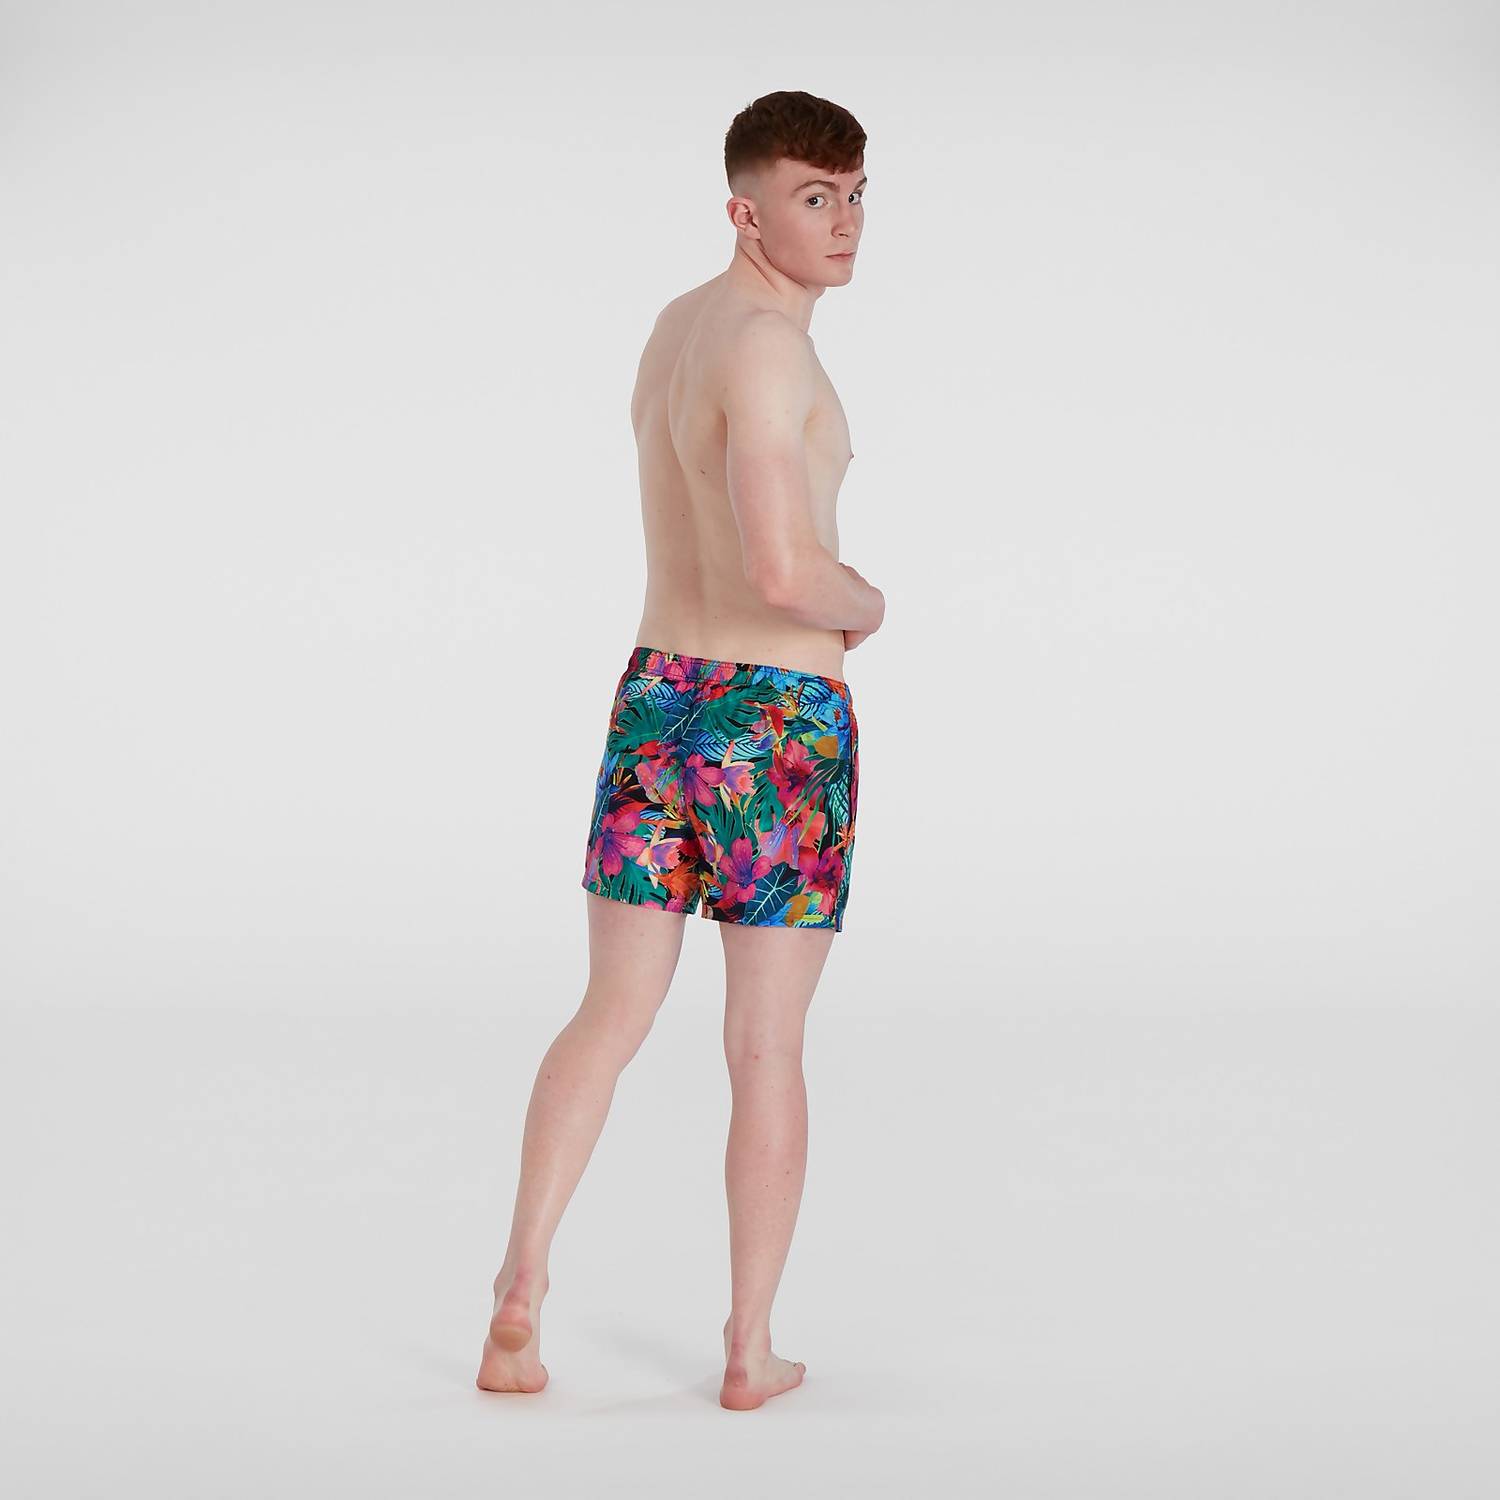 Hommes Short De Bain Homme Digital Printed Leisure 35 Cm Rose/Bleu Shorts De Bain Speedo – 1